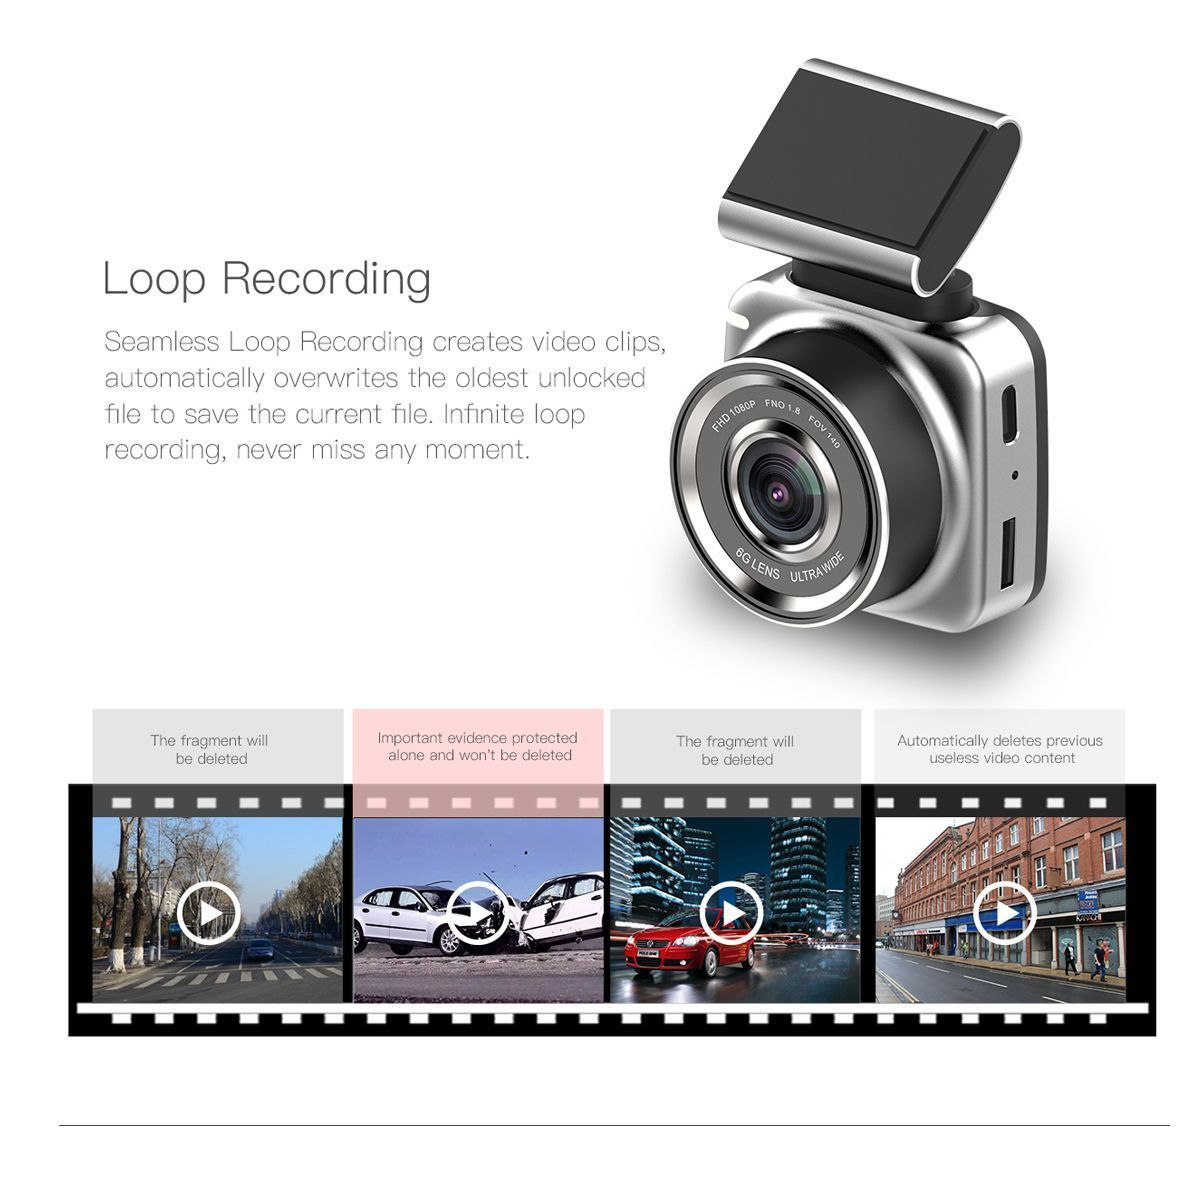 ANYTEK-Q2N-1080P-2-Inch-Dual-Lens-Auto-Recording-G--Sensor-Car-DVR-Camera-1510926